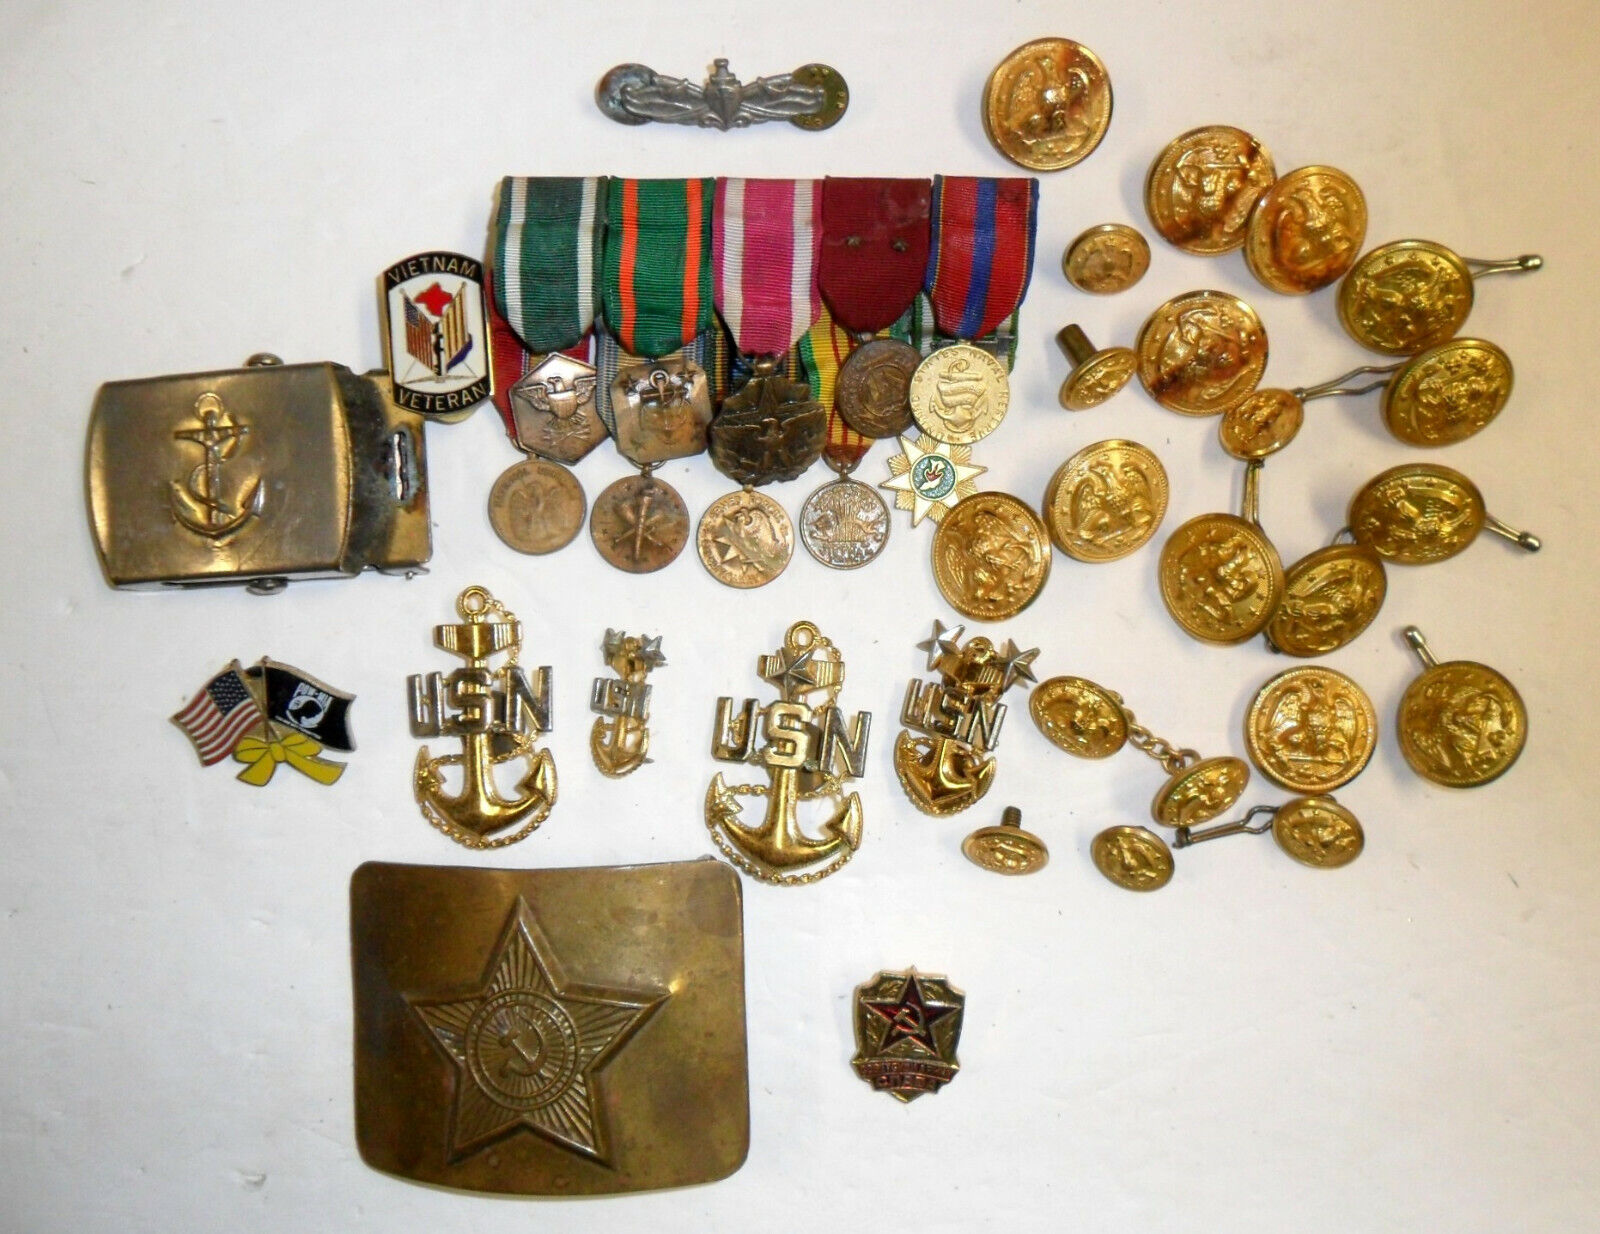 US Navy miniature medals bar, rank badges, & more.